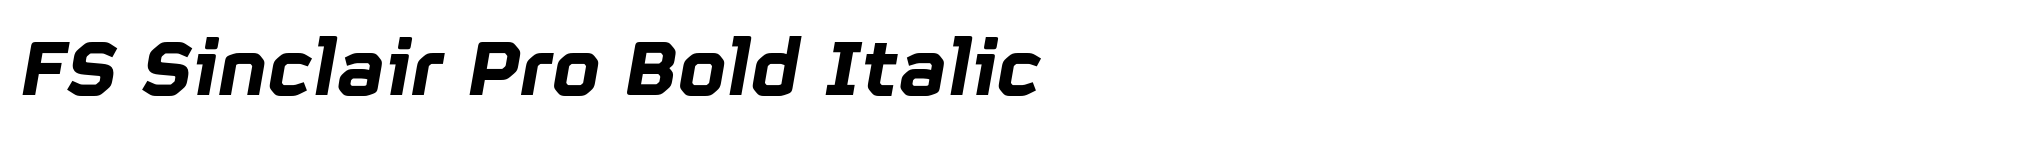 FS Sinclair Pro Bold Italic image